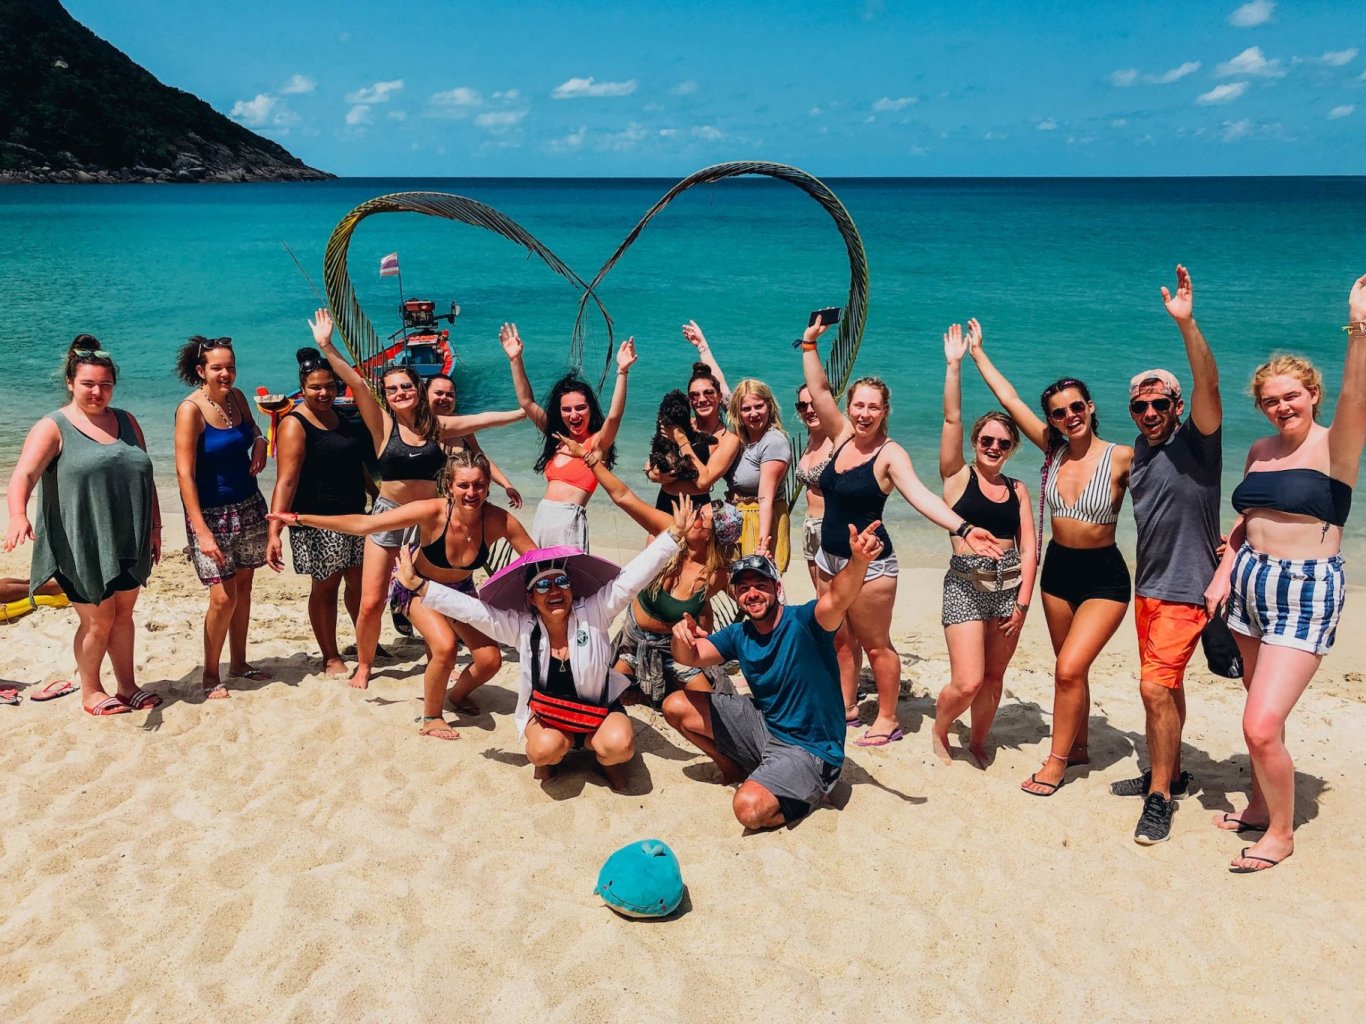 Group photo at bottle beach, Thailand